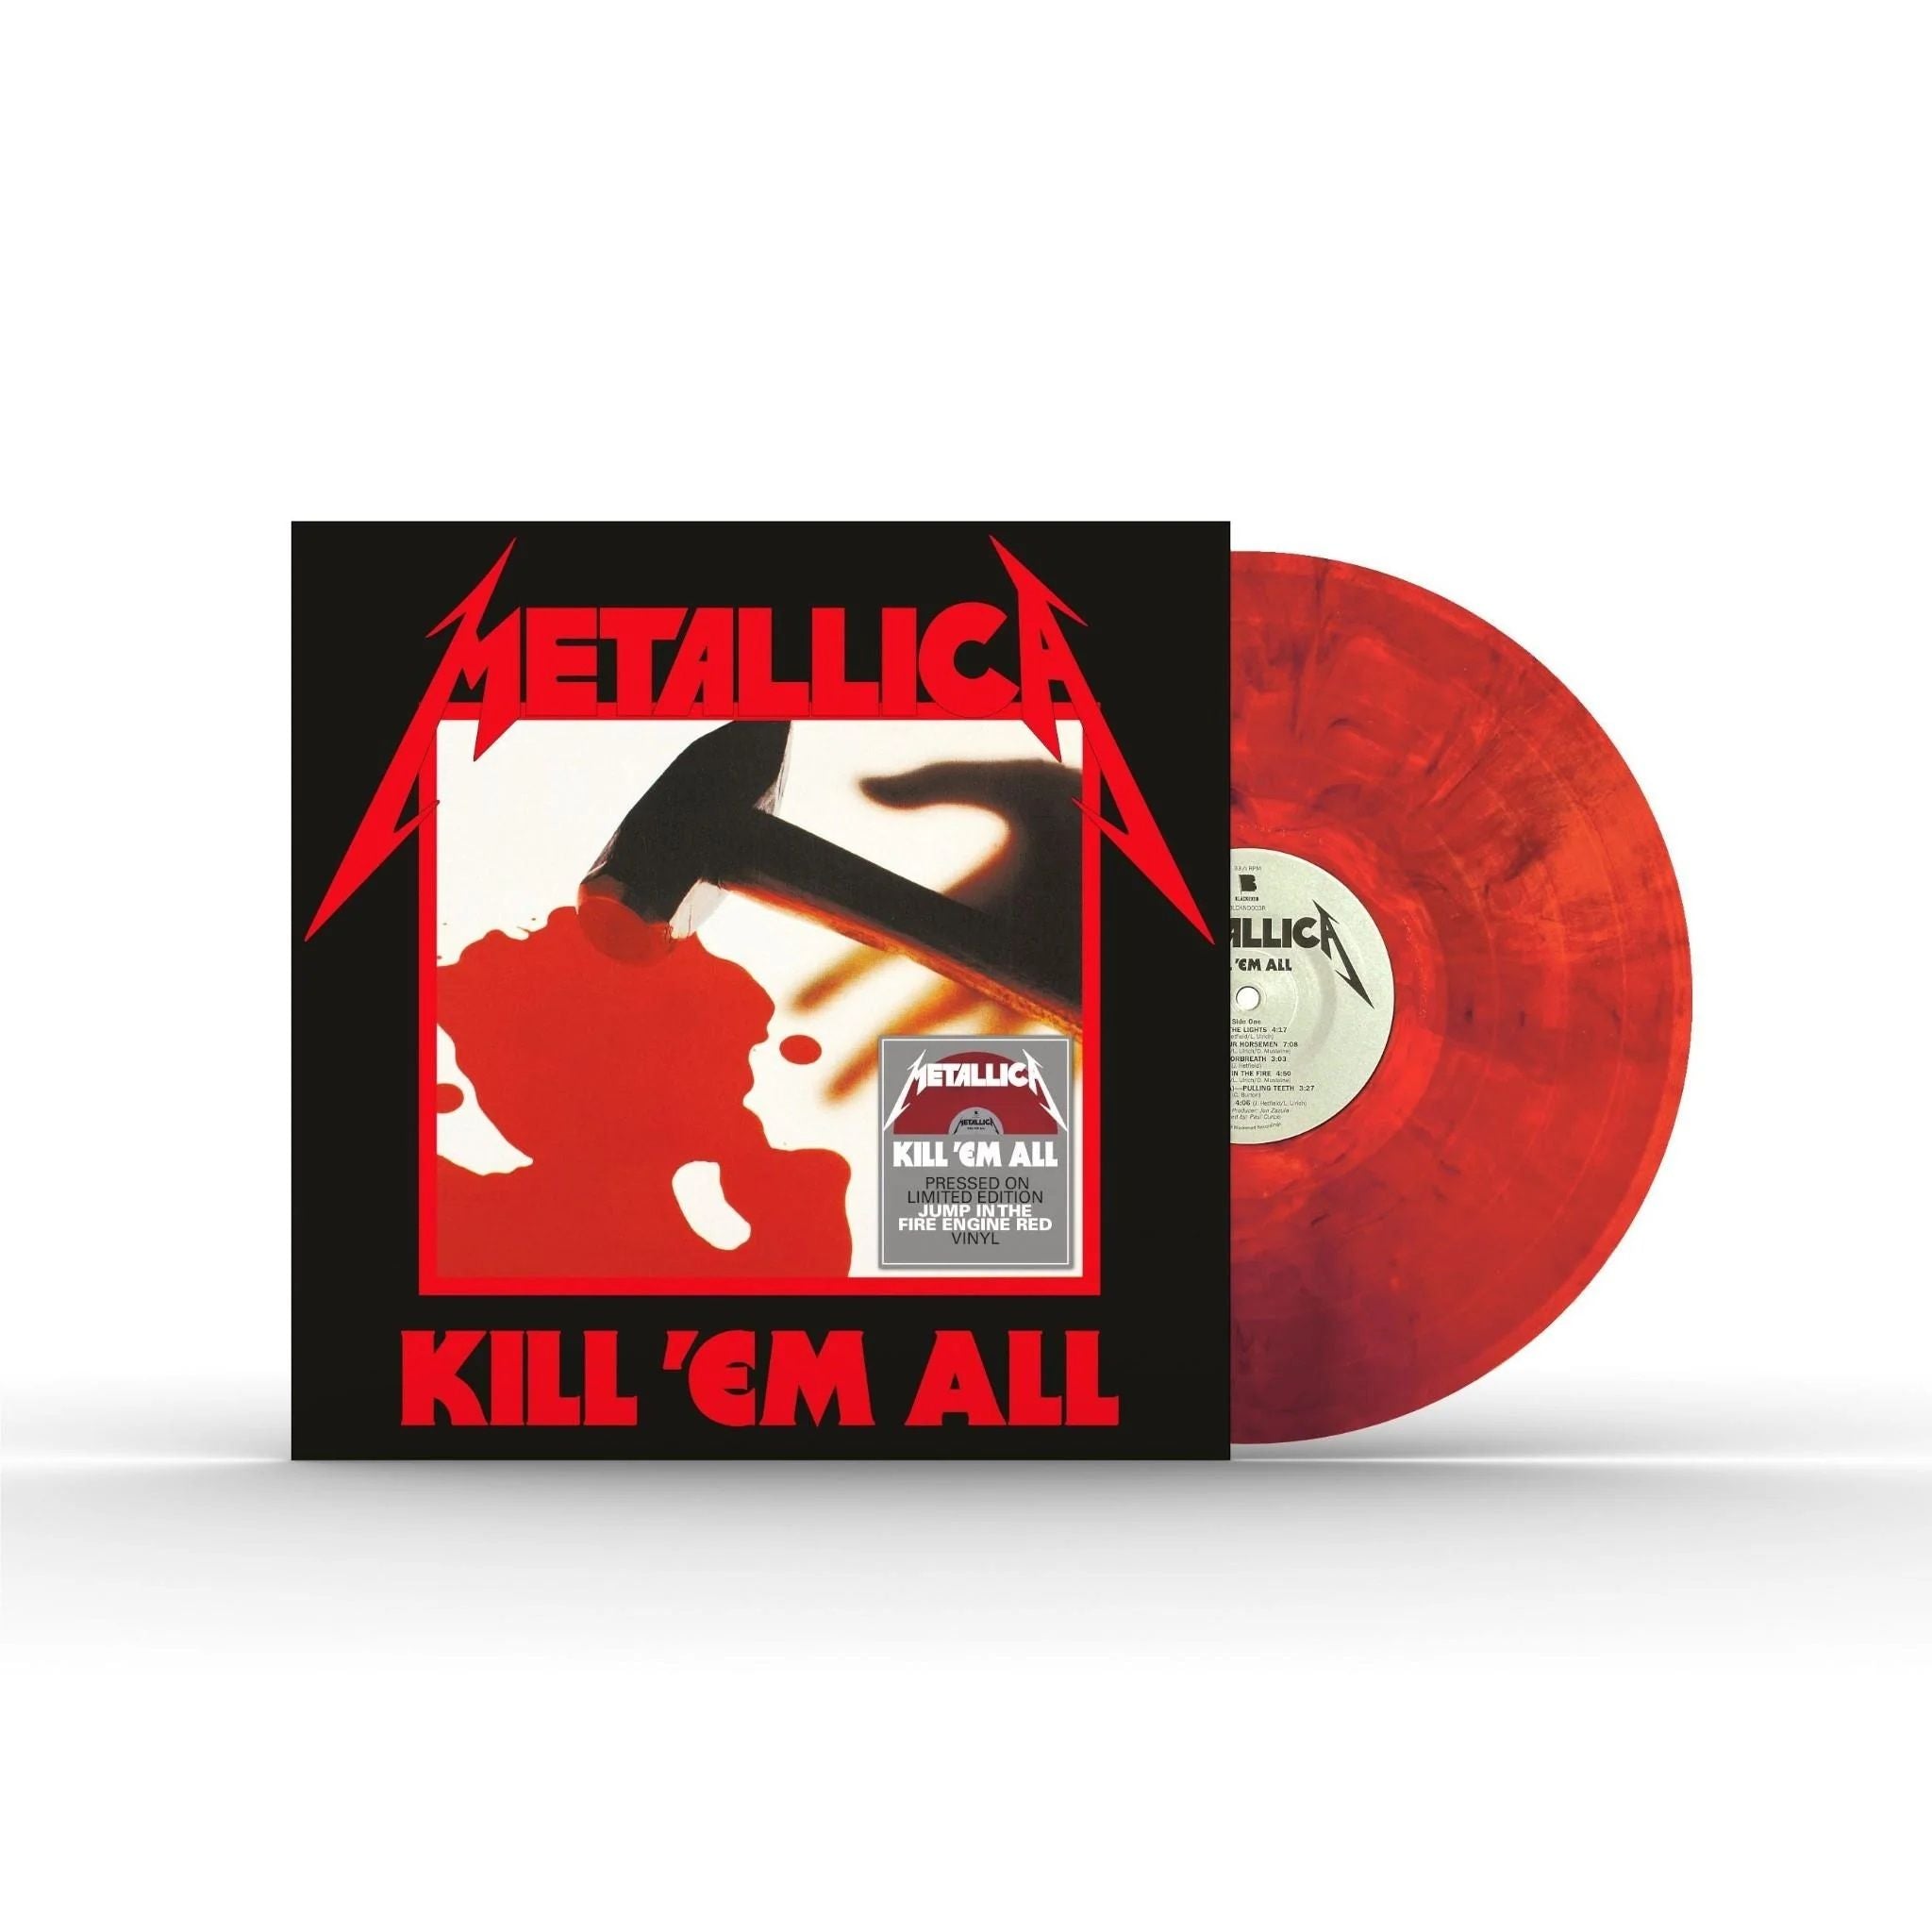 Metallica - Kill 'Em All (Ltd. Ed. Jump In The Fire Engine Red vinyl reissue) - Vinyl - New